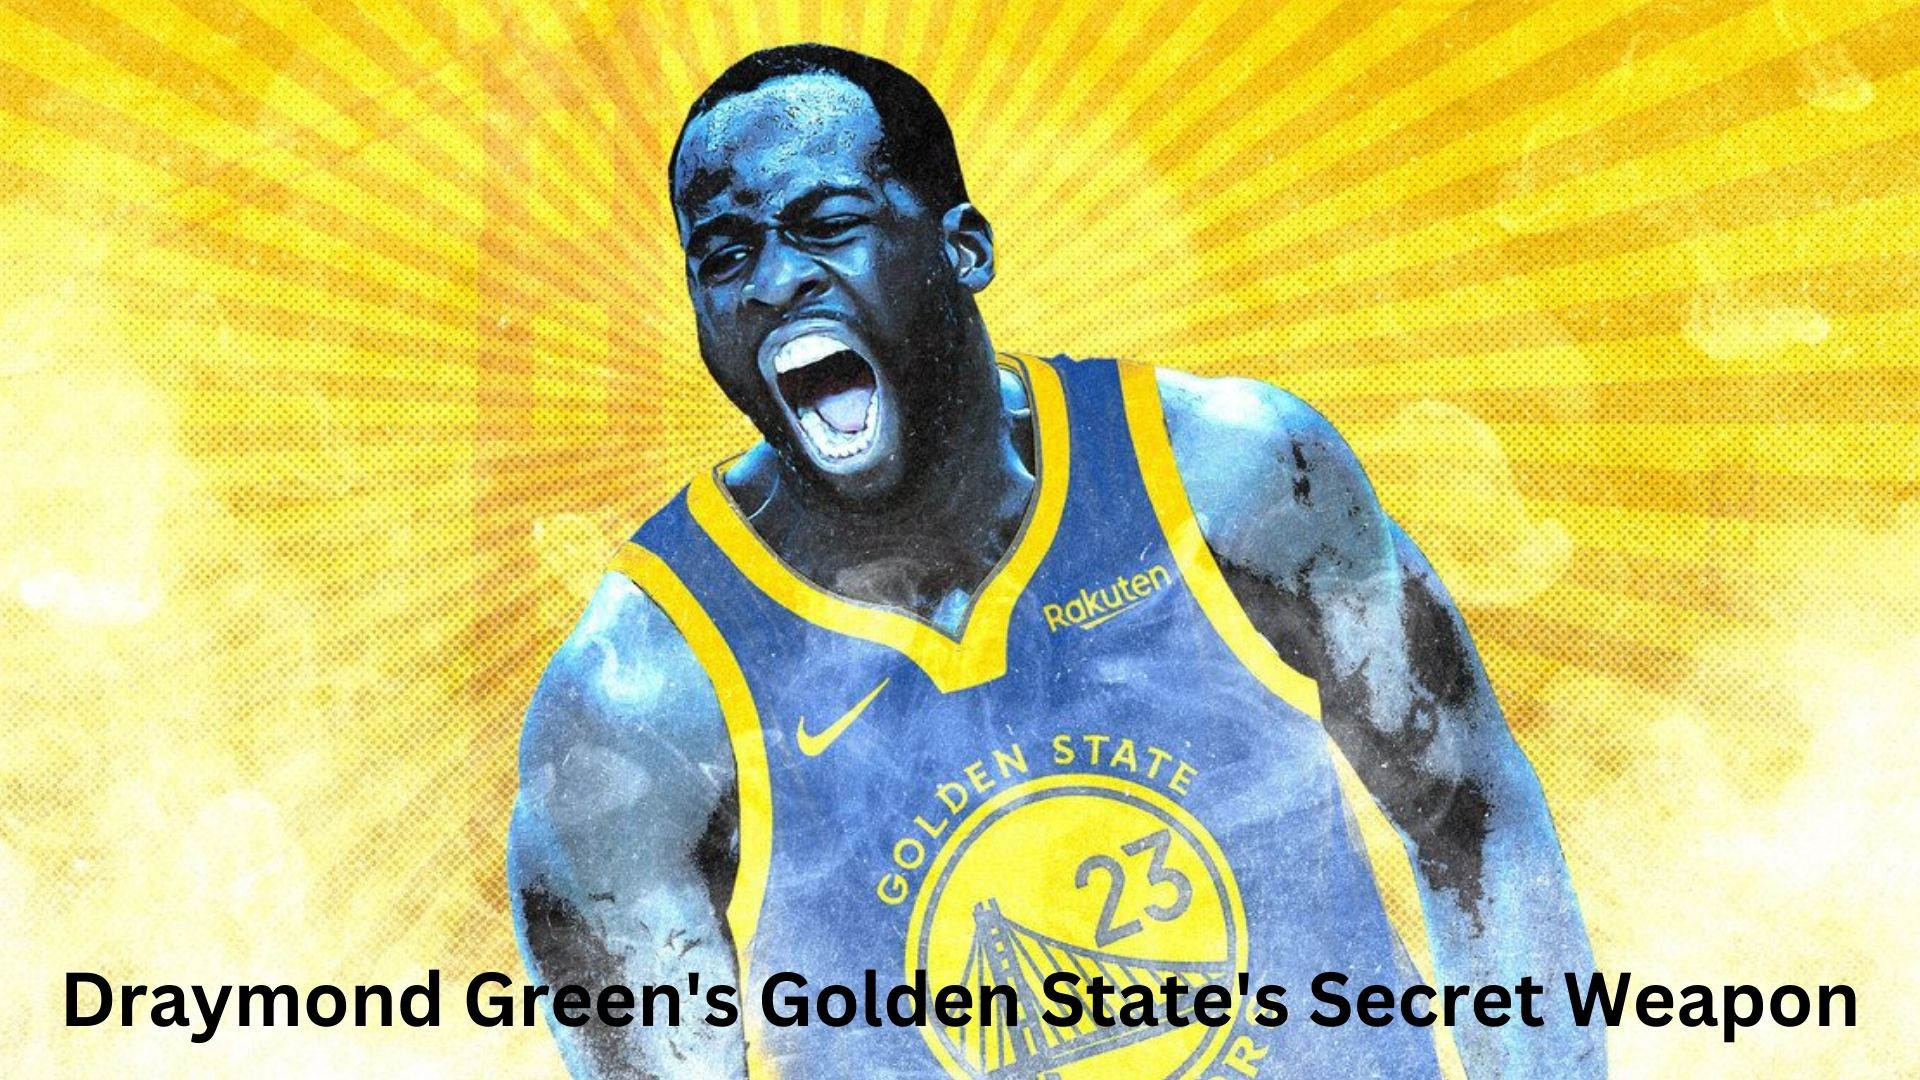 Draymond Green's Golden State's Secret Weapon